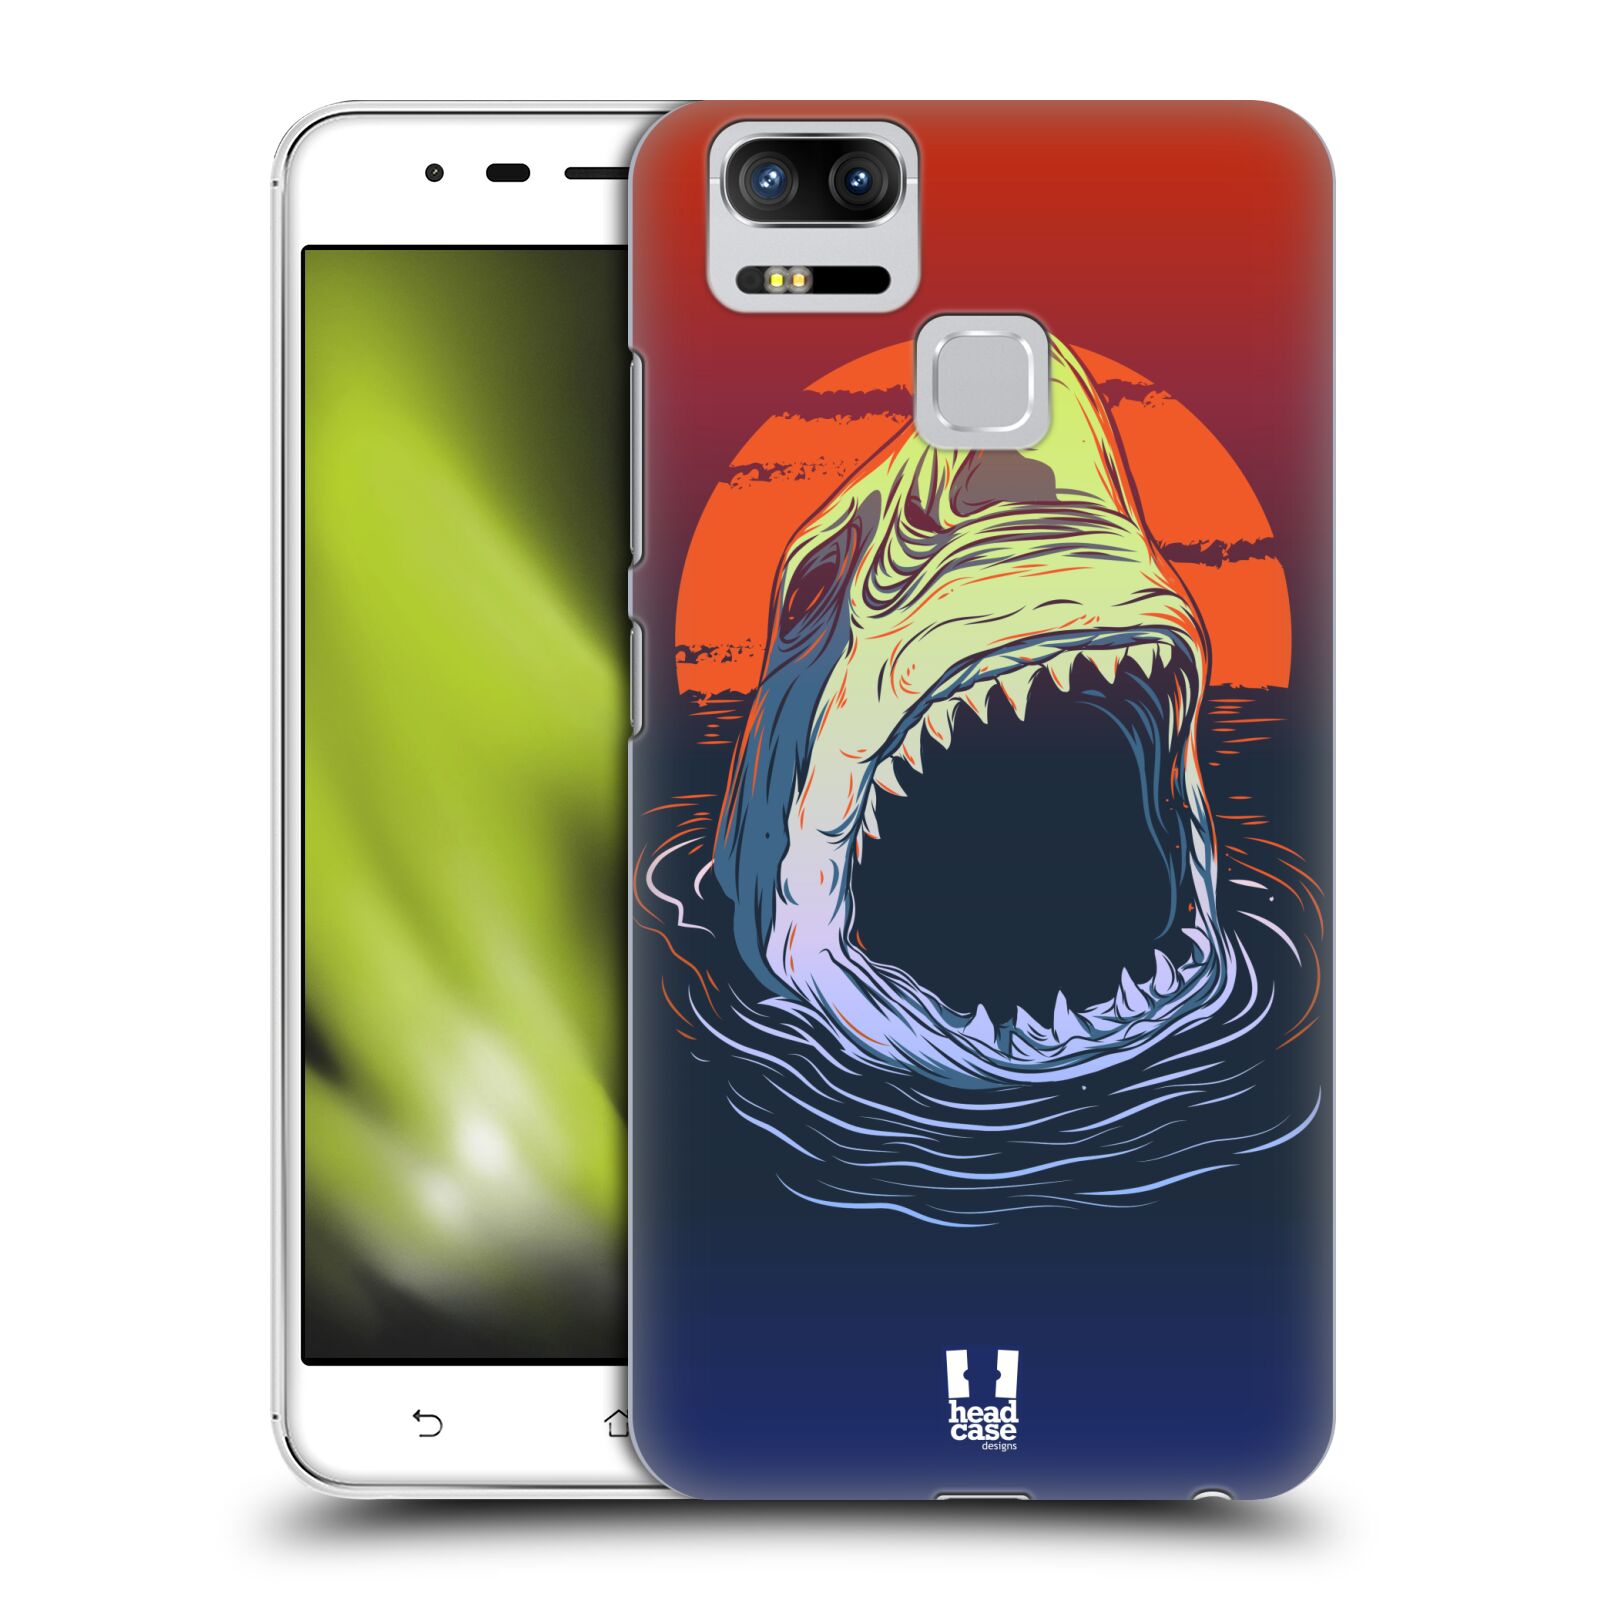 HEAD CASE plastový obal na mobil Asus Zenfone 3 Zoom ZE553KL vzor mořská monstra žralok